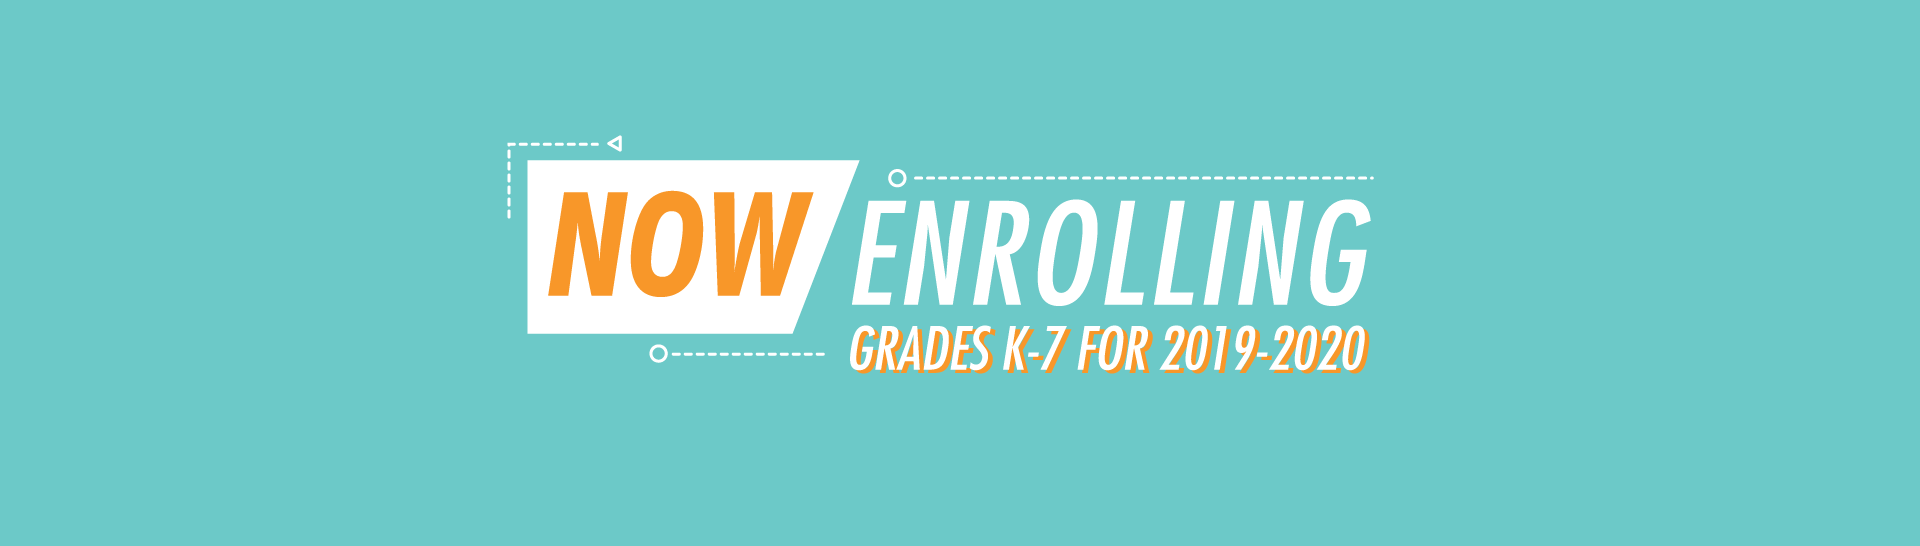 Now enrolling grades K-7 for 2019-2020 school year